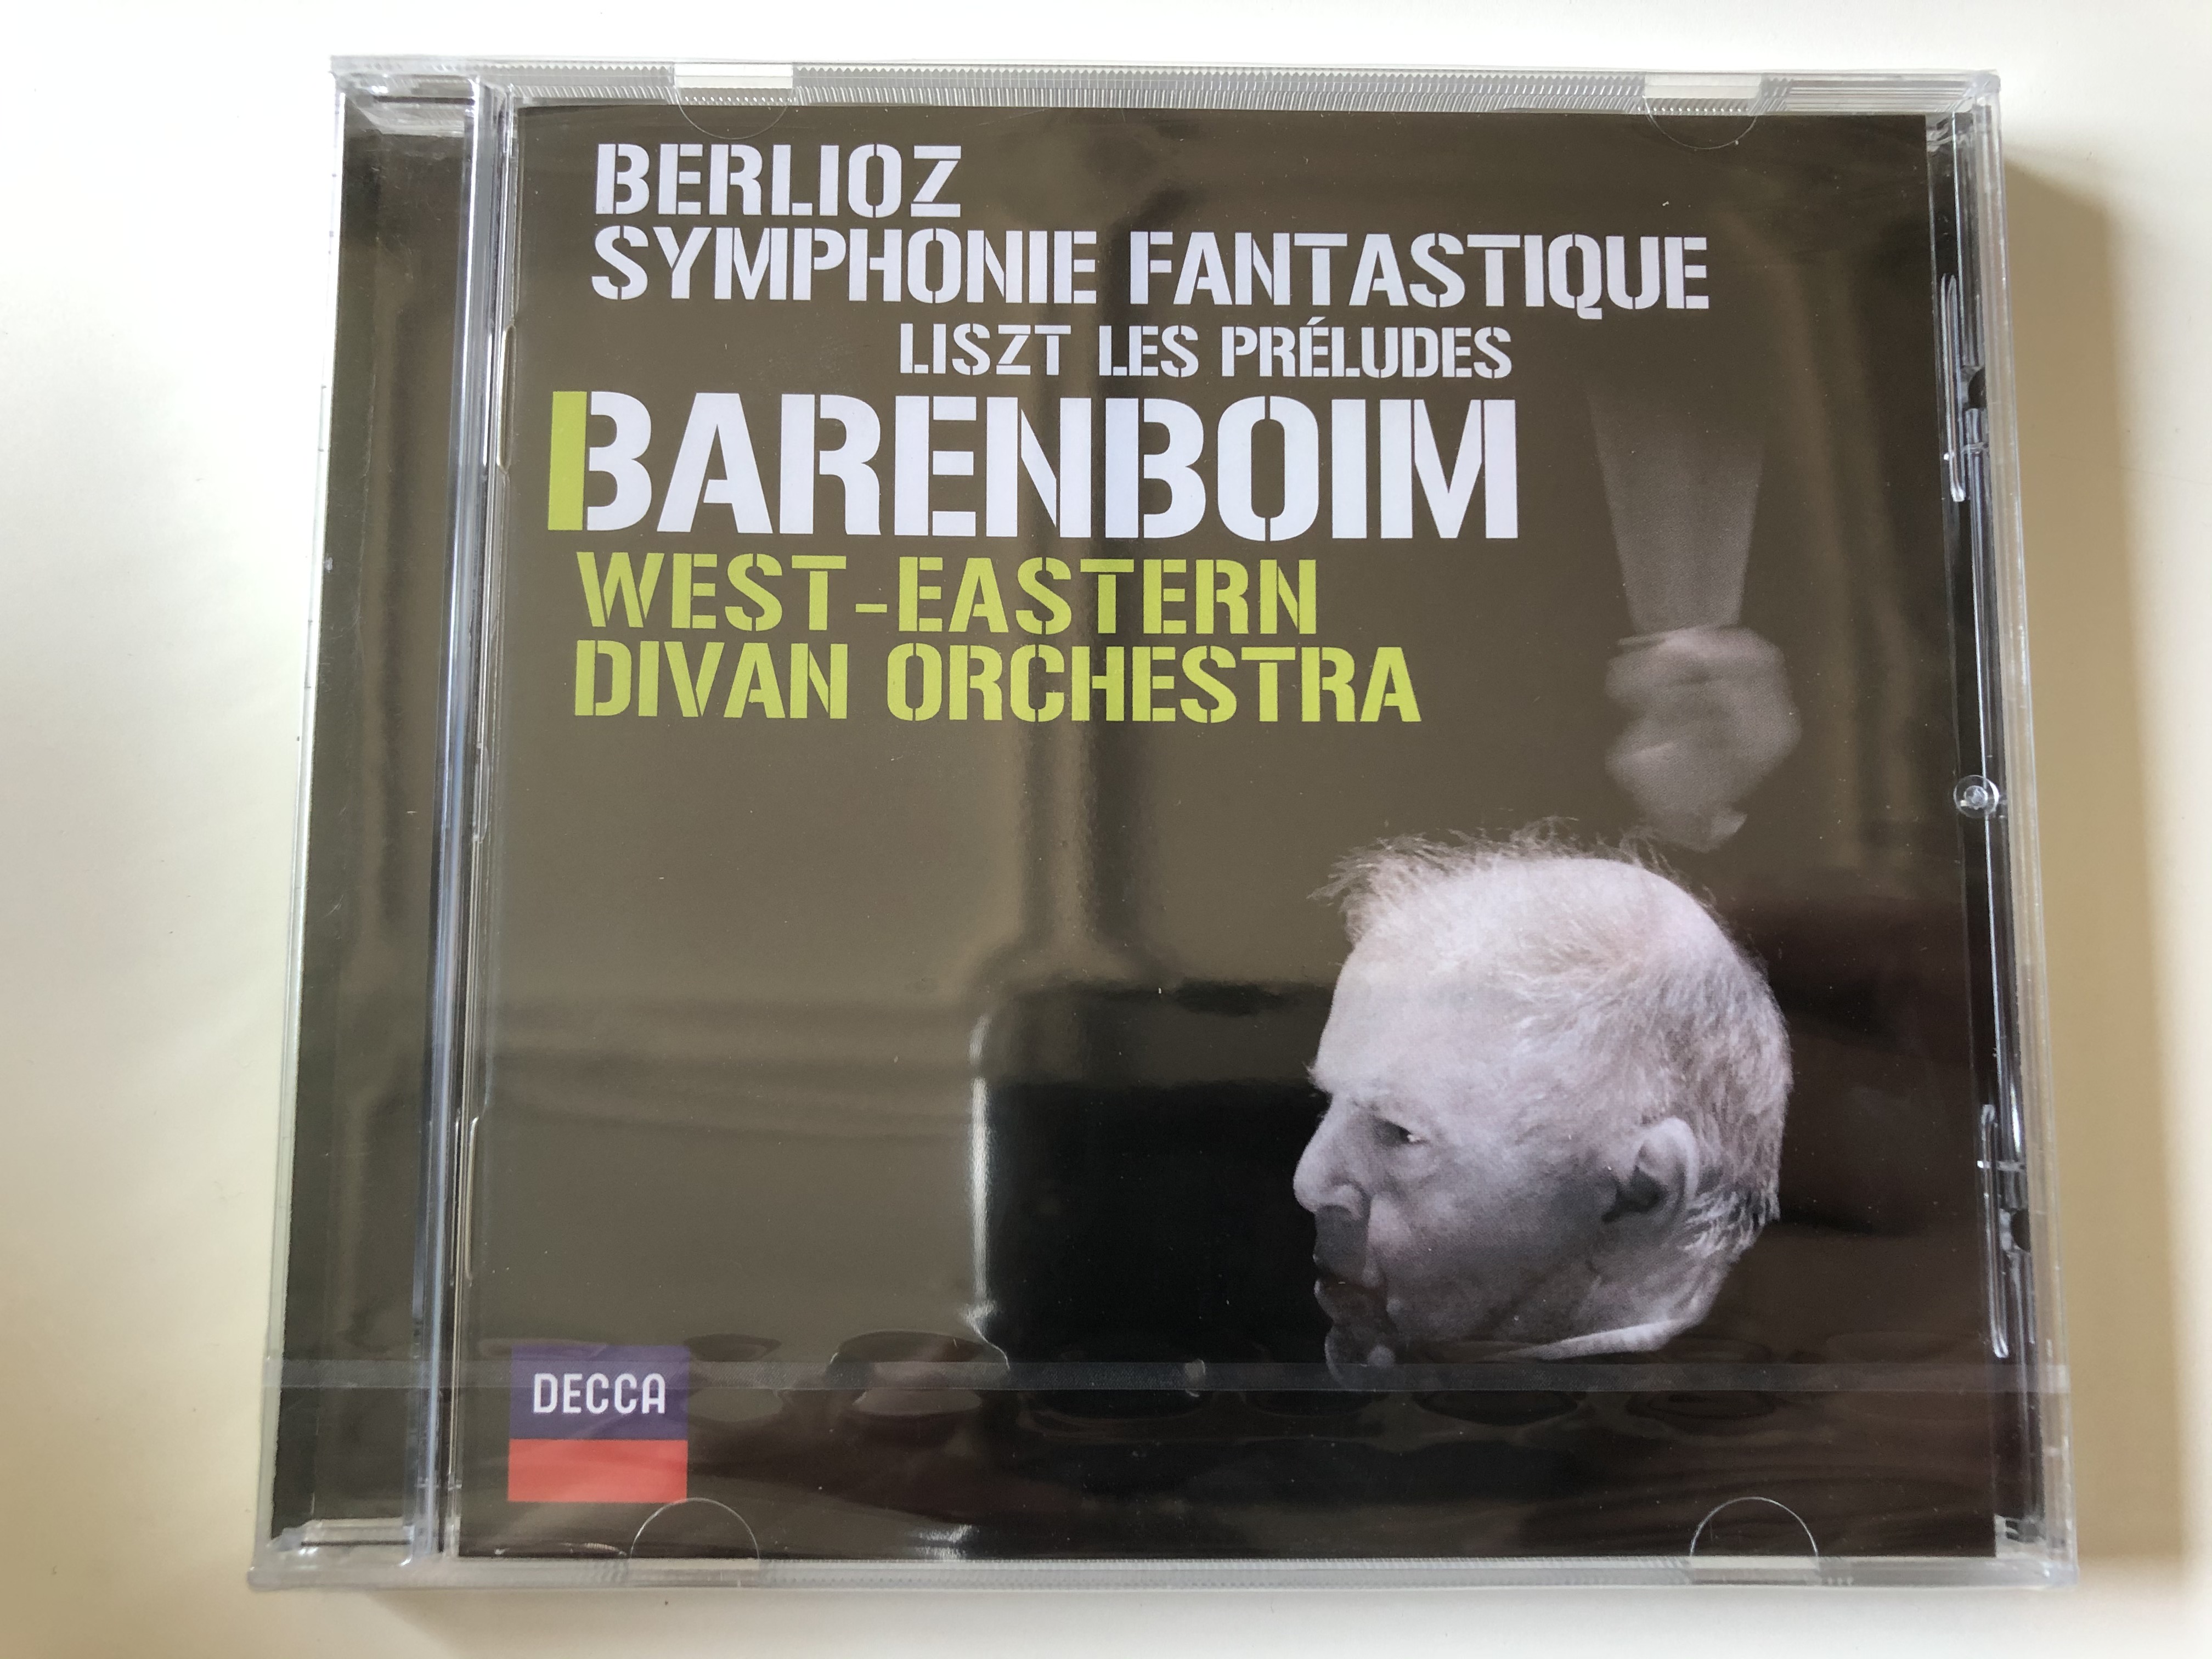 berlioz-symphonie-fantastique-liszt-les-preludes-barenboim-west-eastern-divan-orchestra-decca-audio-cd-2013-478-5350-1-.jpg